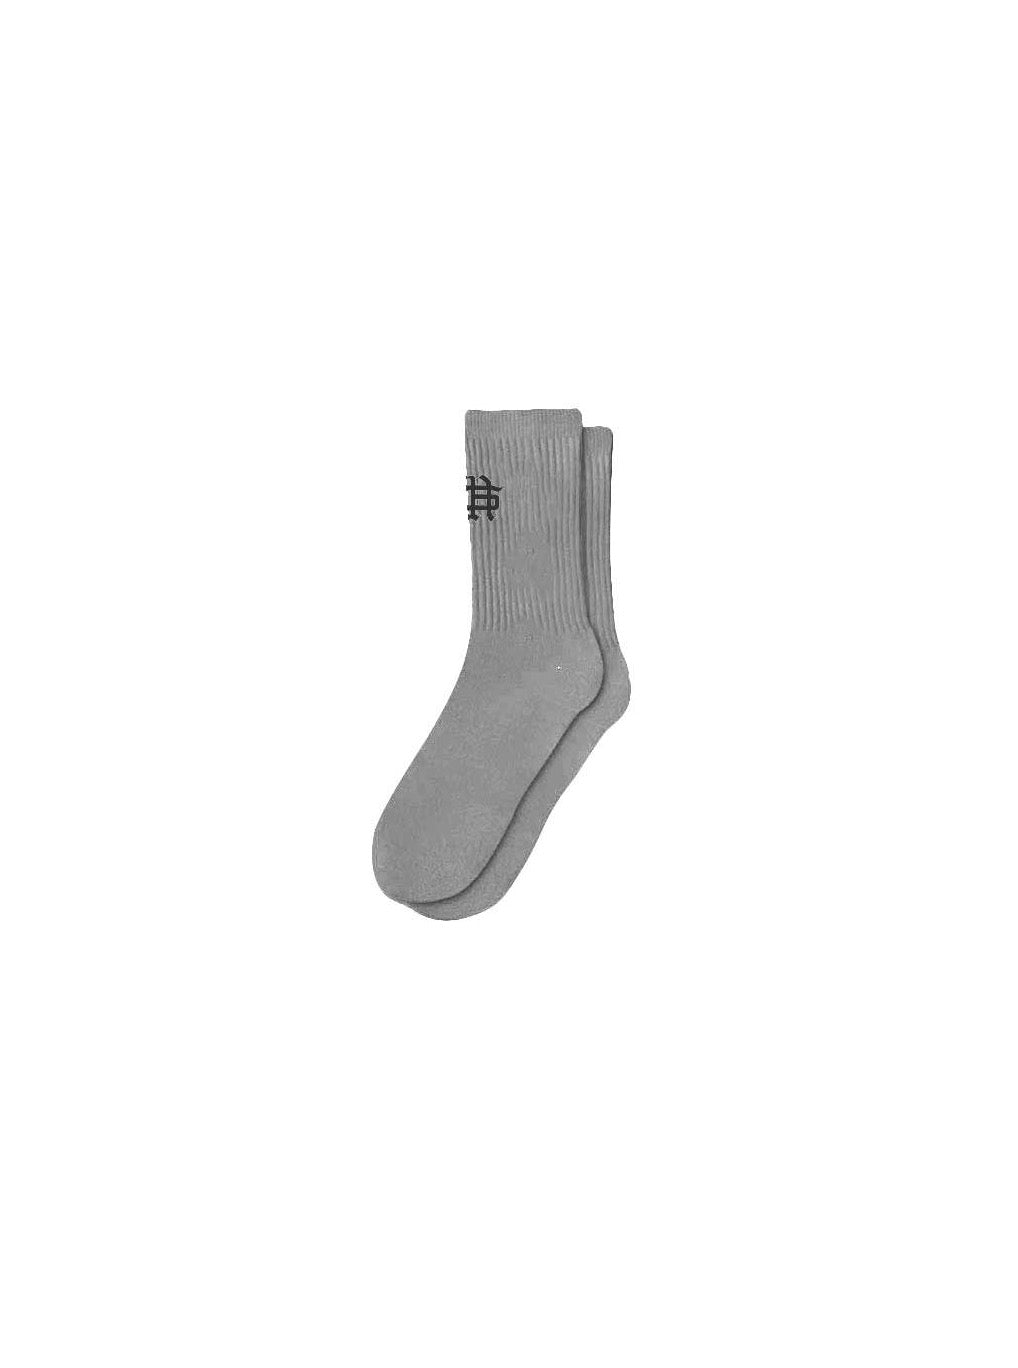 Sole et. Al Revølutiøn Sock : Grey / Black